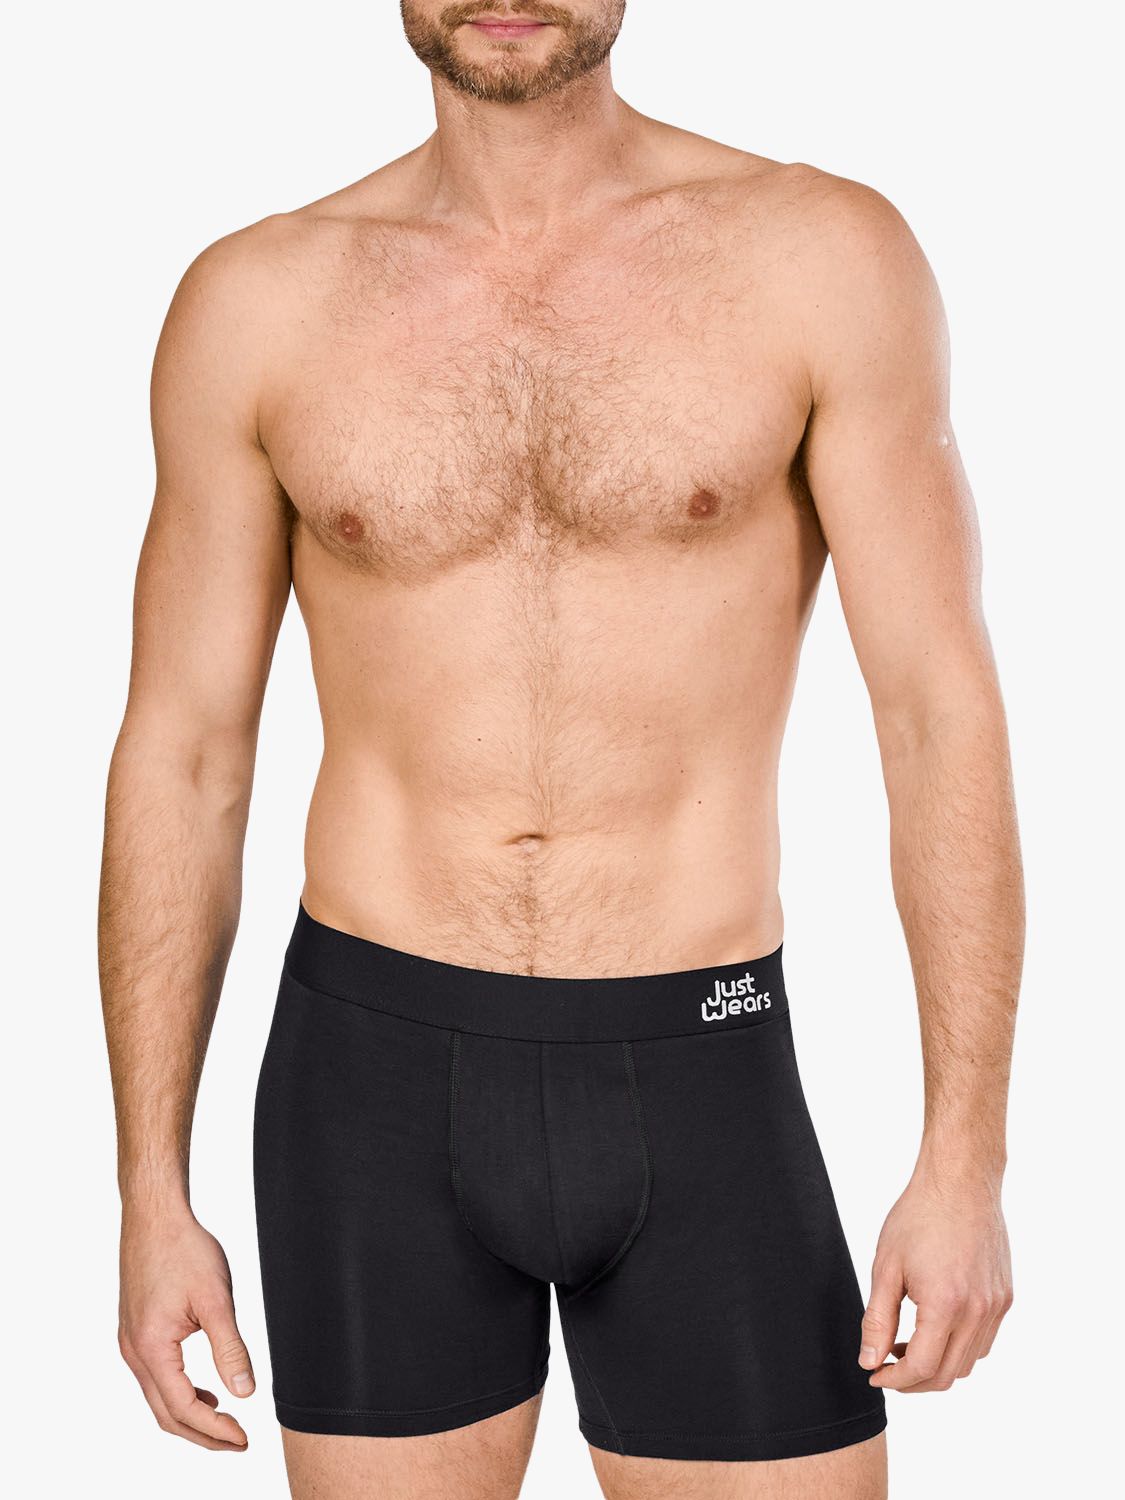 New Balance Black 6 Boxer Briefs Underwear 2 in Box New in Box Men's XL